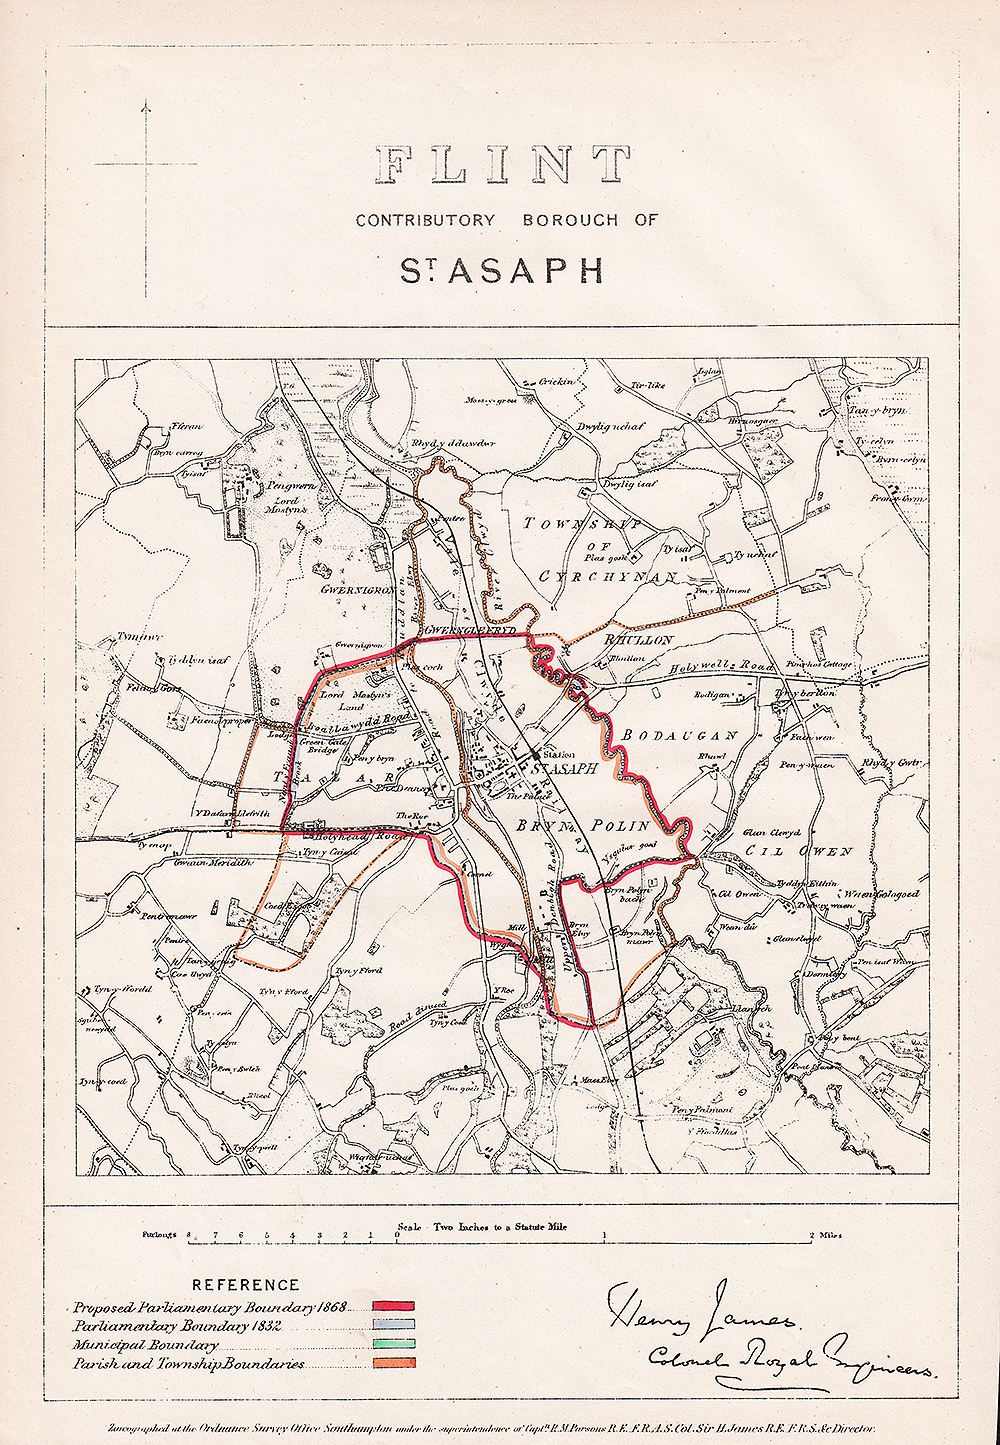 Contributory Boundaries of St. Asaph.